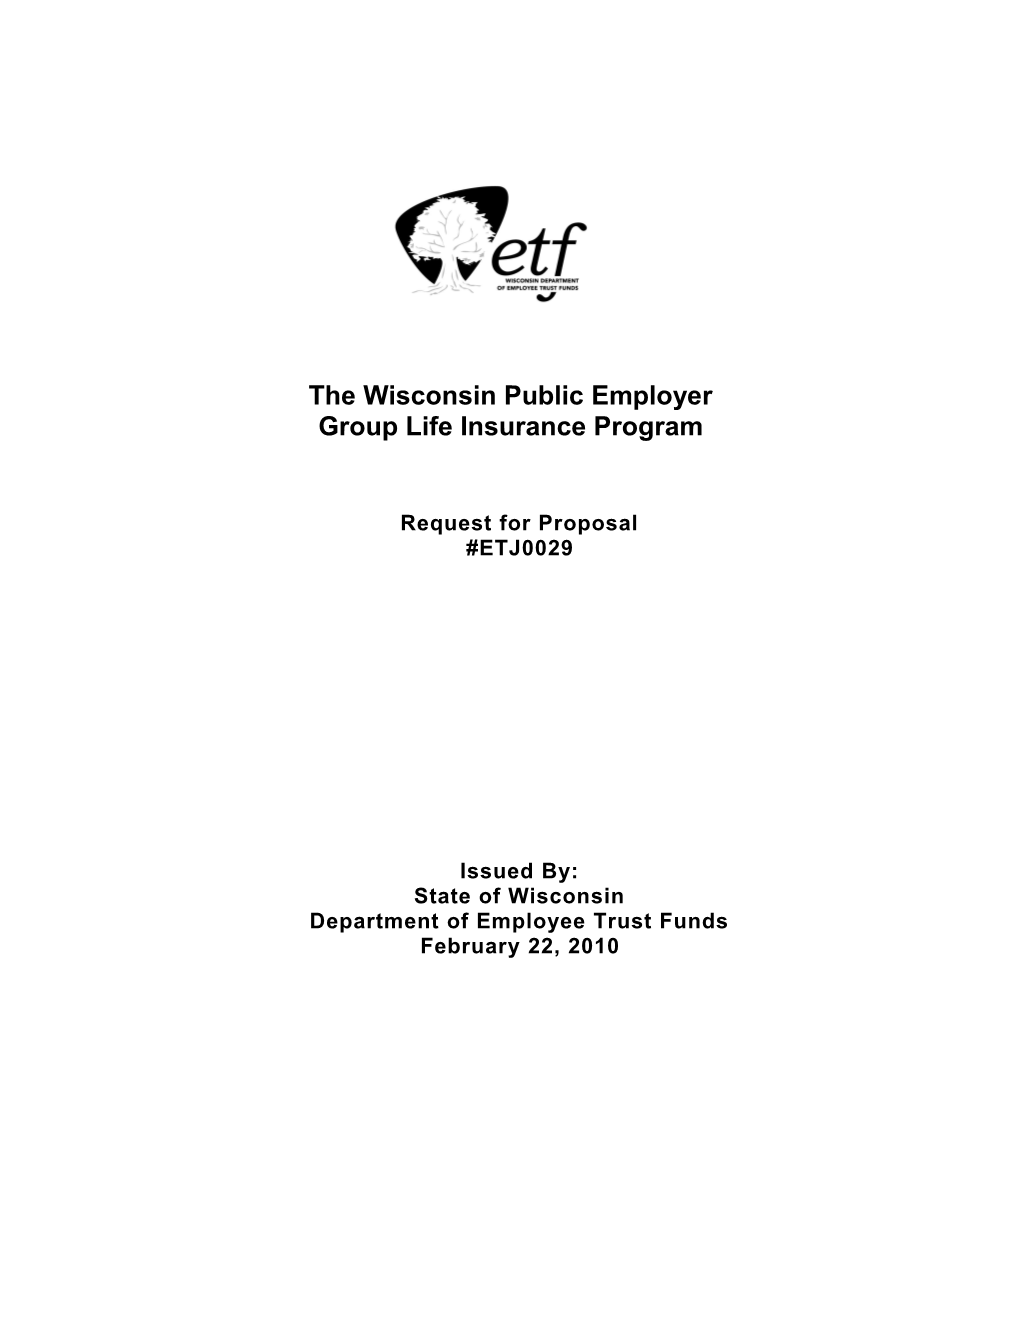 The Wisconsin Public Employer Group Life Insurance Program